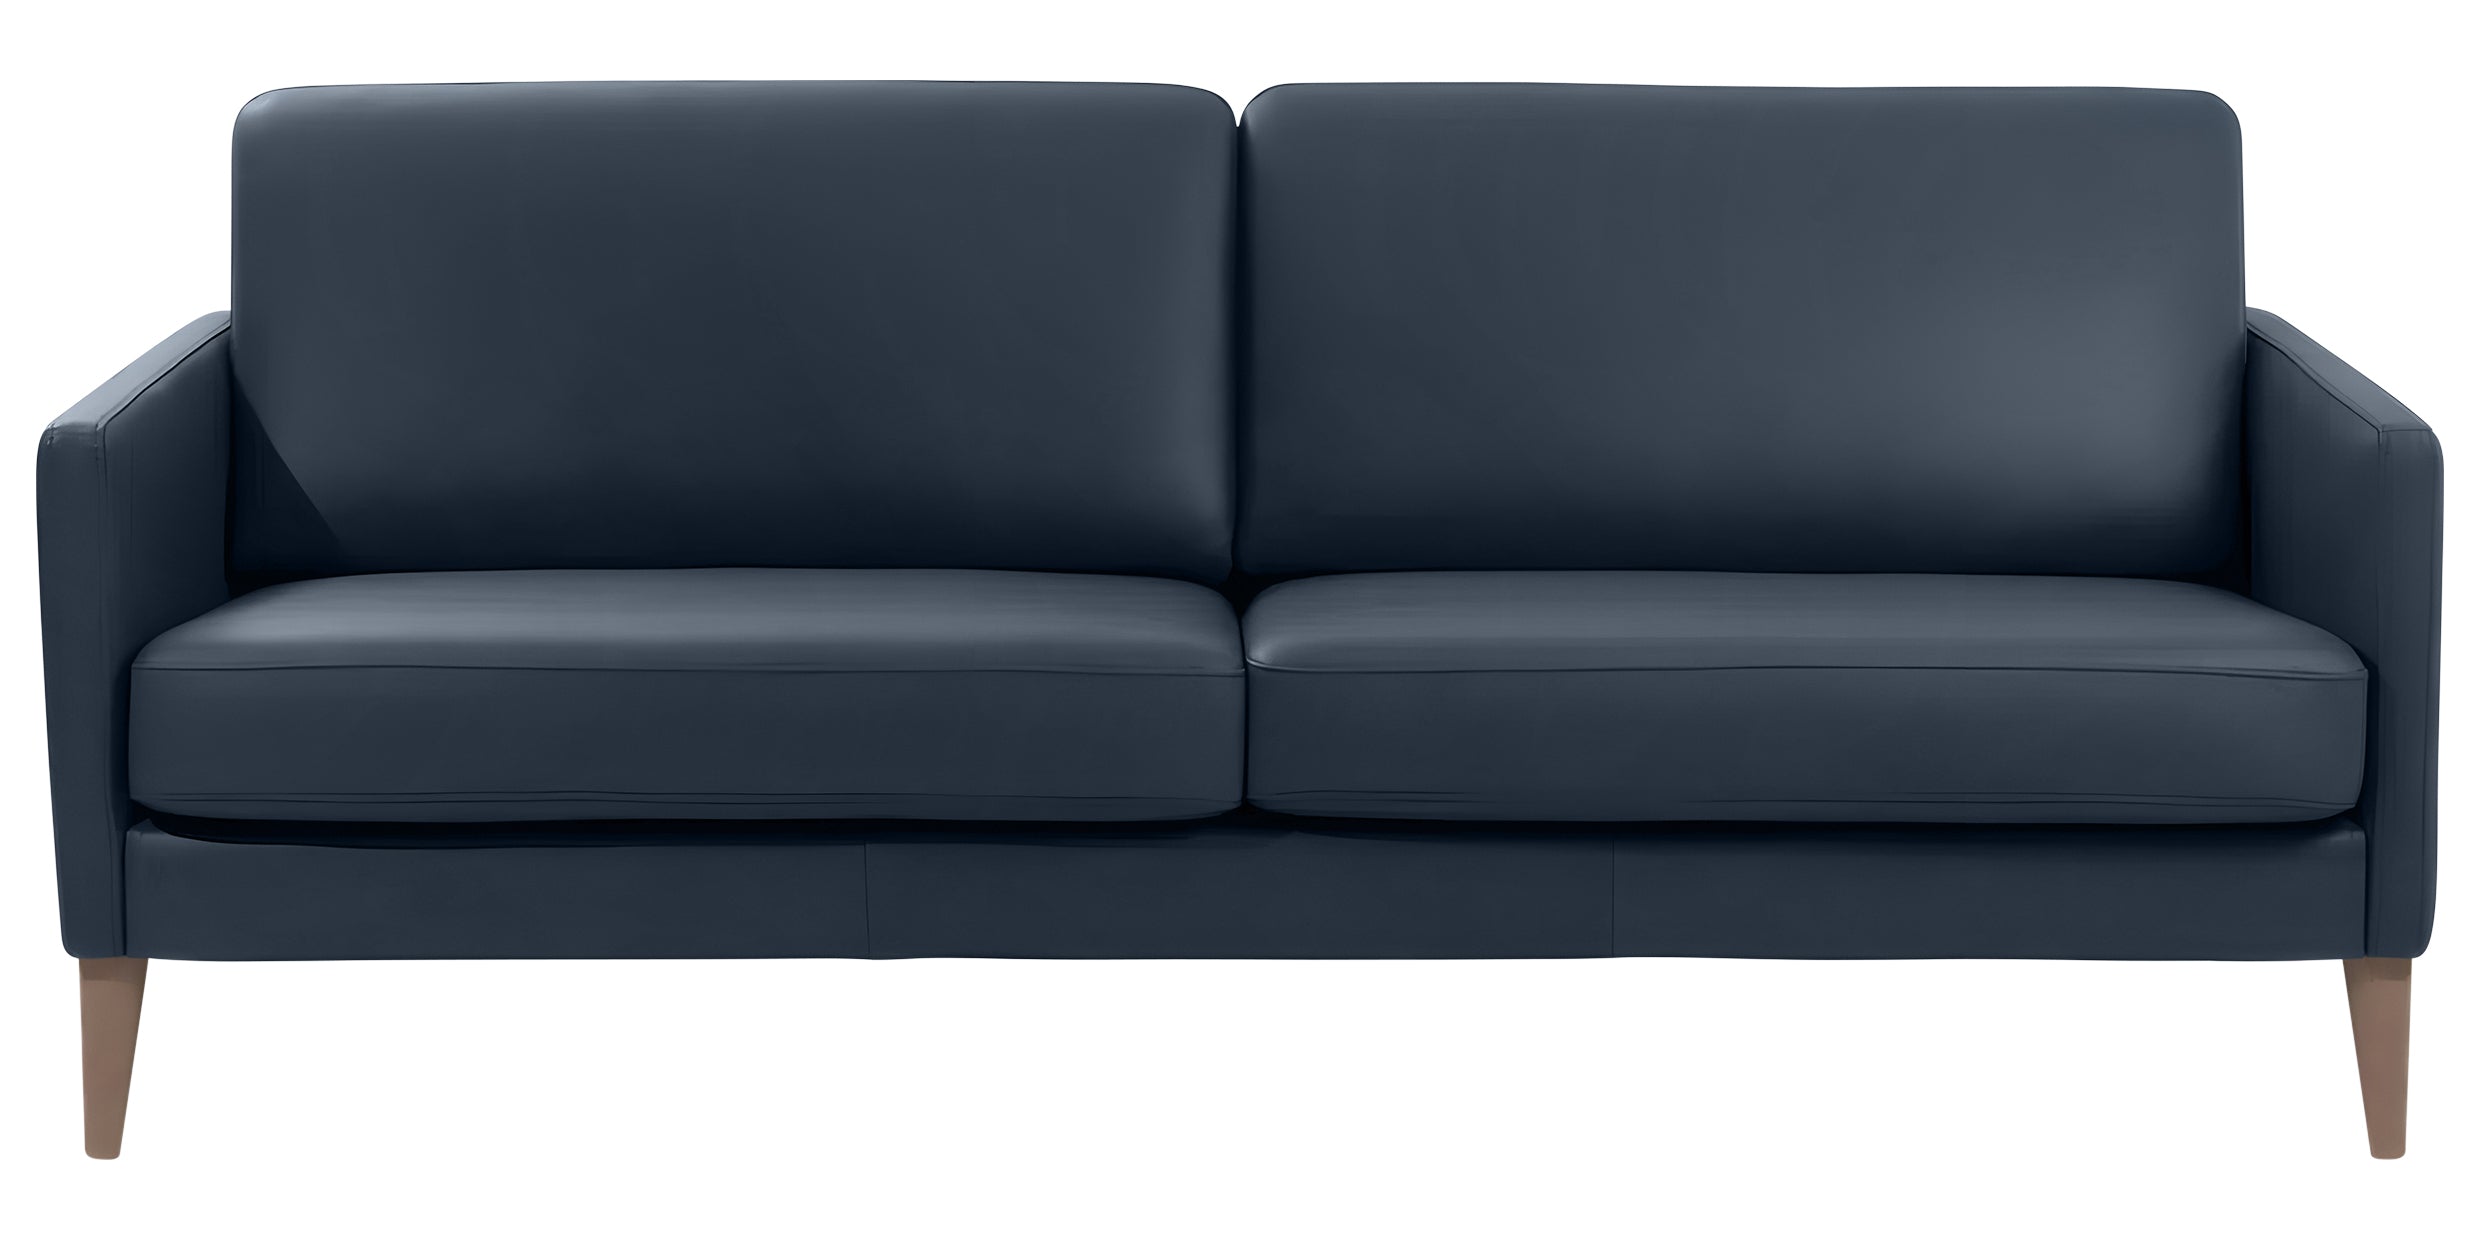 Trend Leather Pacific | Norwegian Comfort Nordberg 3-Seater Duo Sofa - Promo | Valley Ridge Furniture